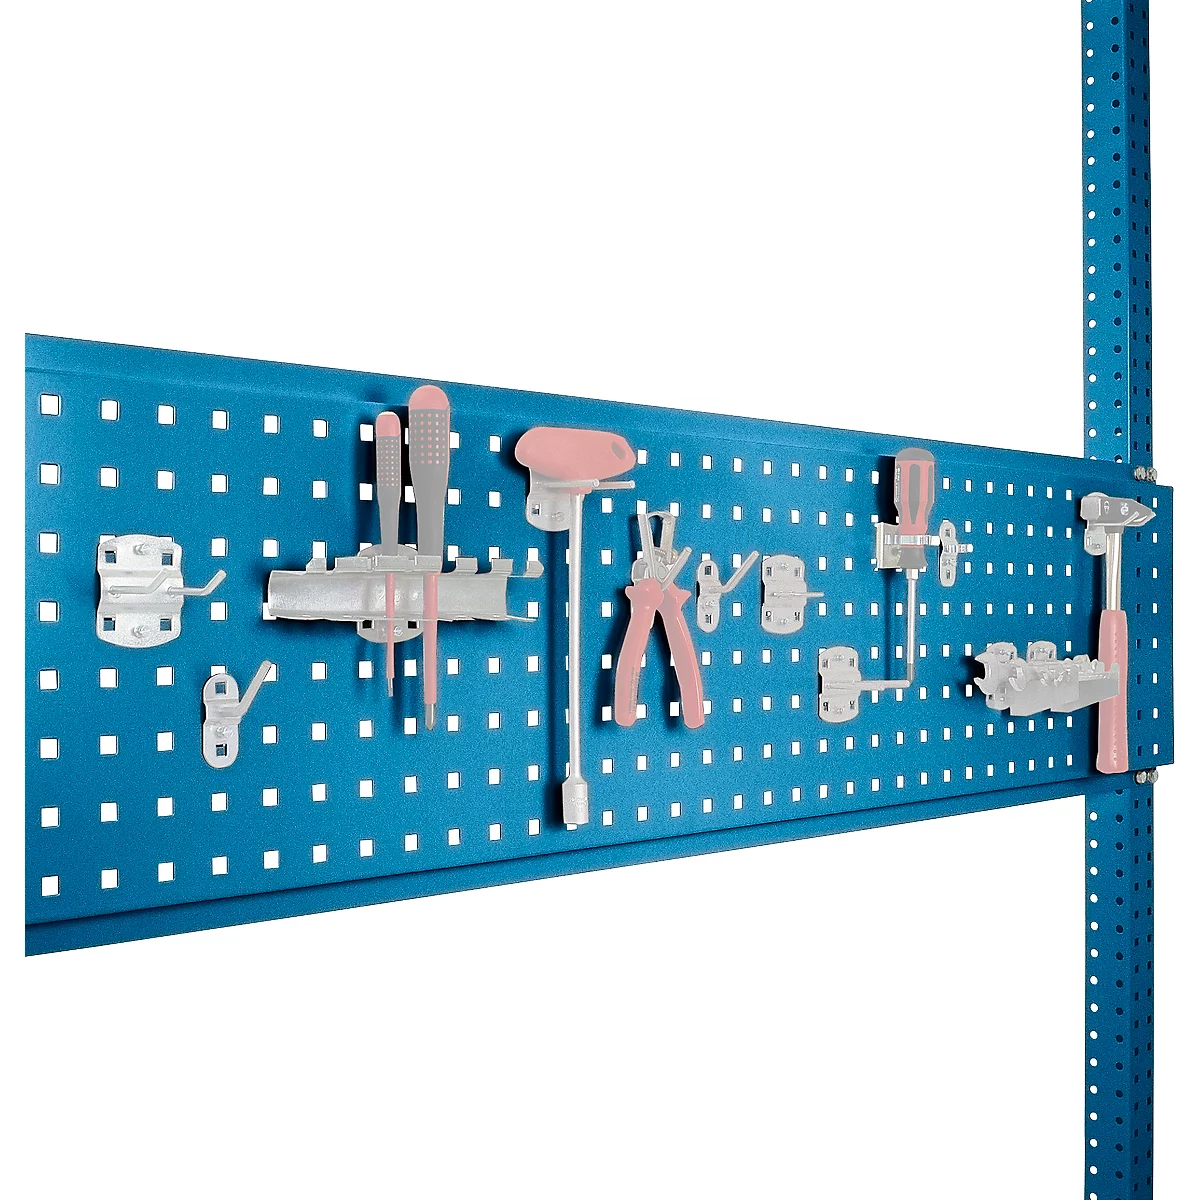 Placa perforada para herramientas, para anchura de mesa 1500 mm, para serie Universal/Profi, azul luminoso RAL 5012